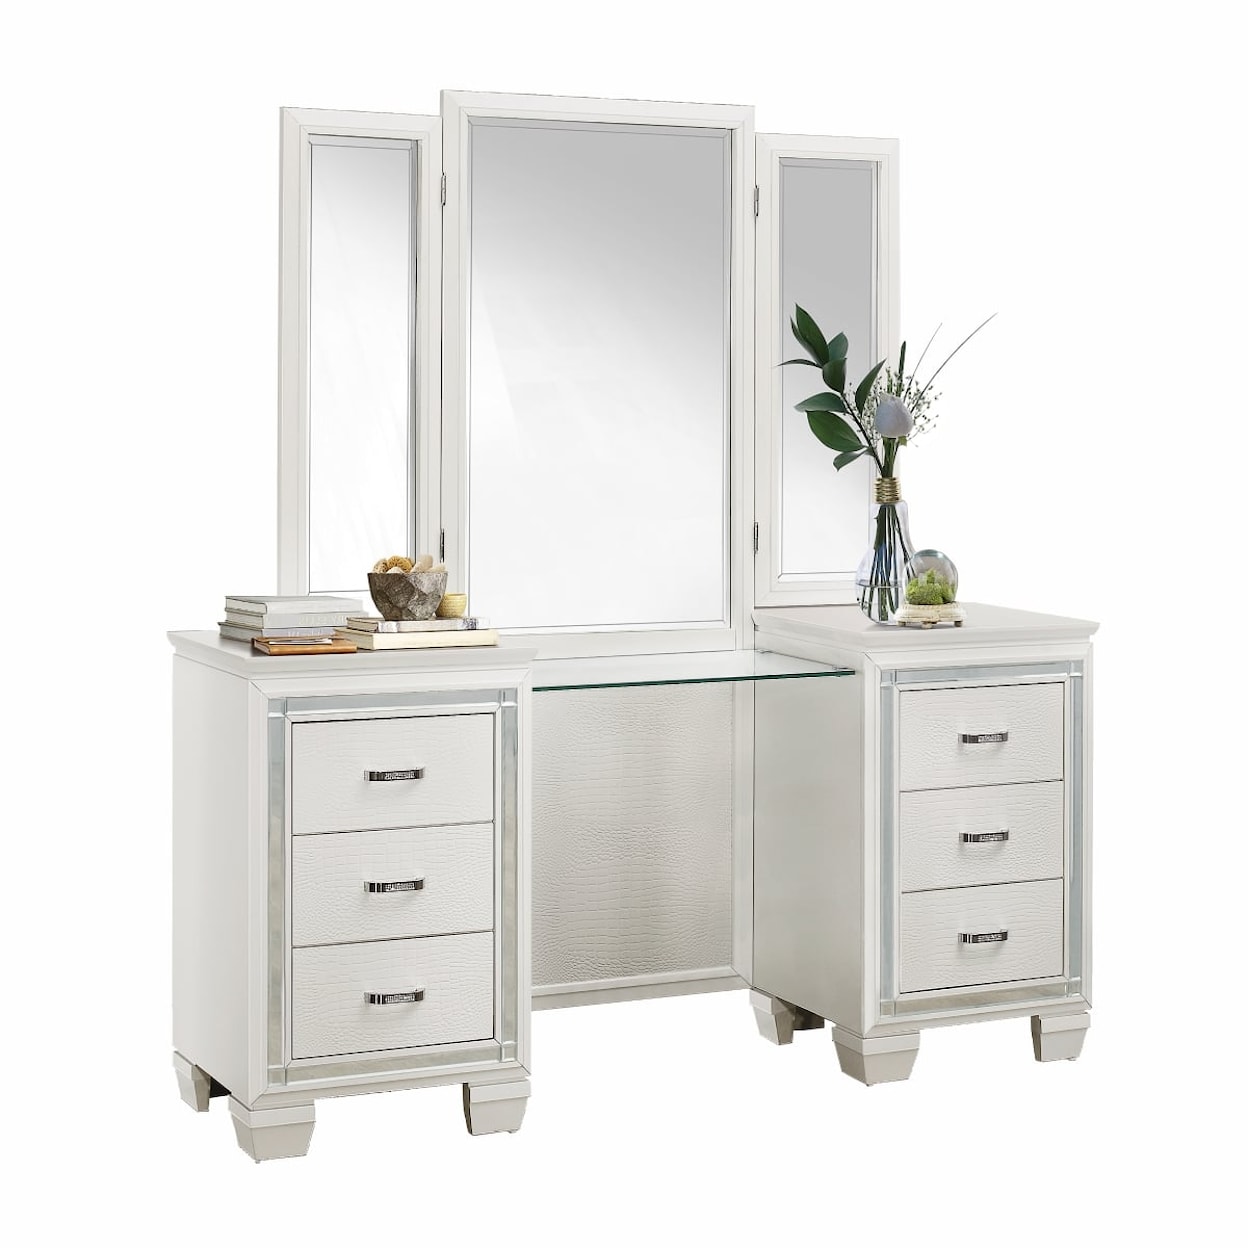 Homelegance Allura Vanity Dresser with Mirror